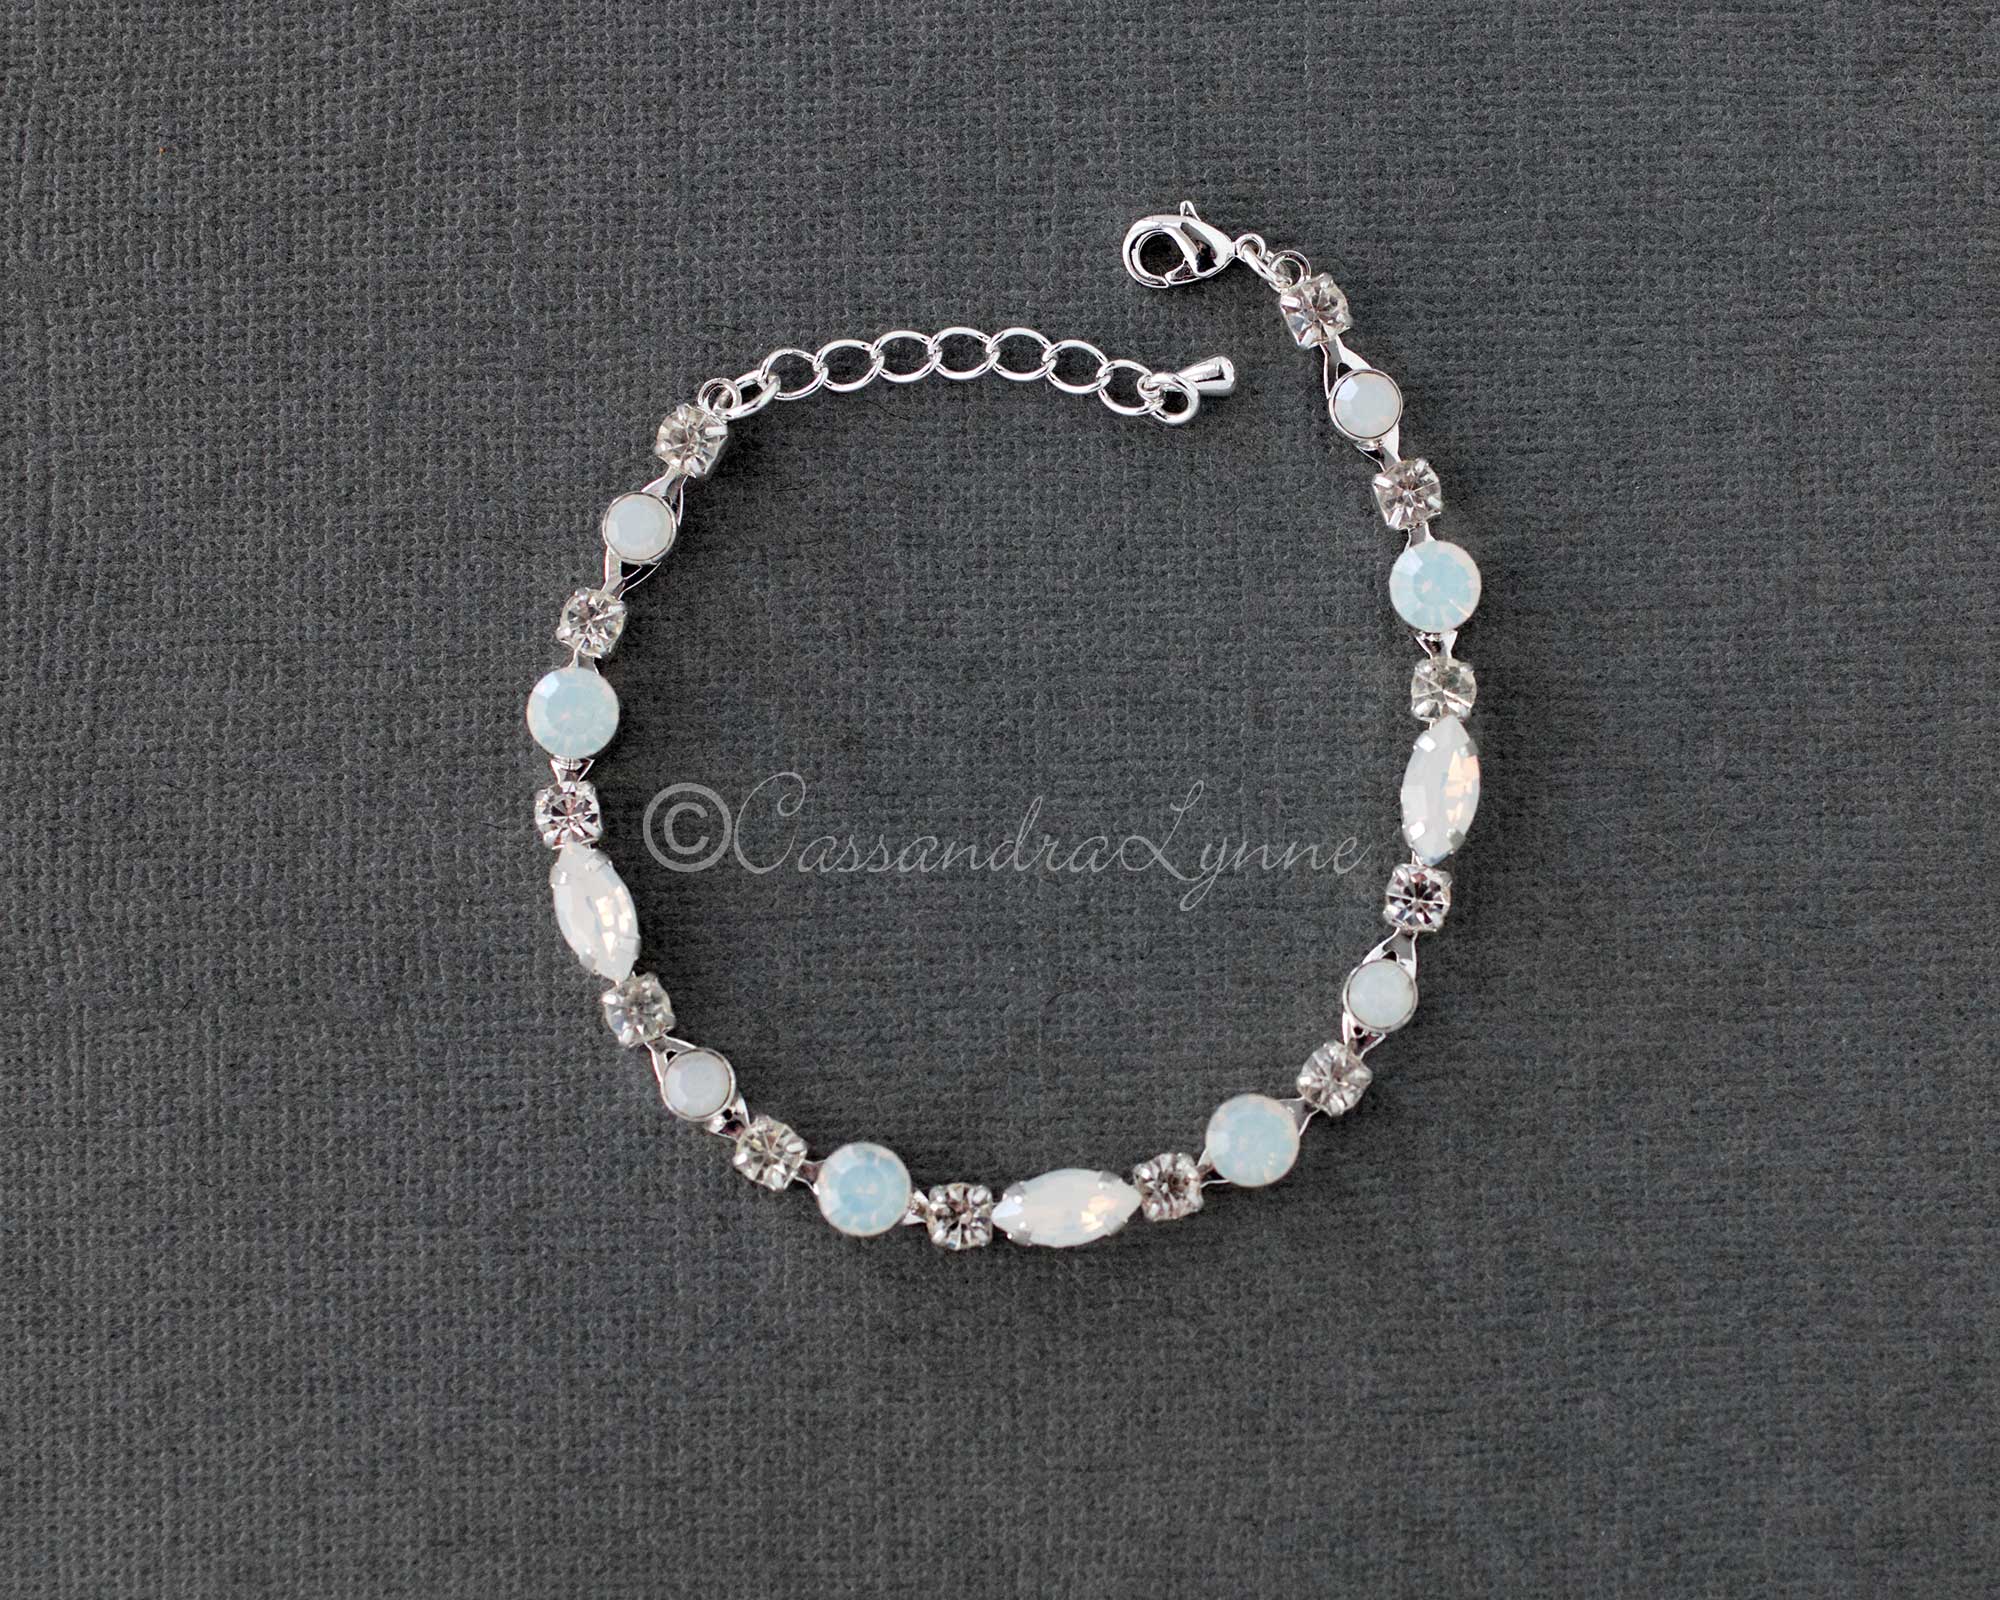 Crystal Bracelet with White Opal Accents - Cassandra Lynne